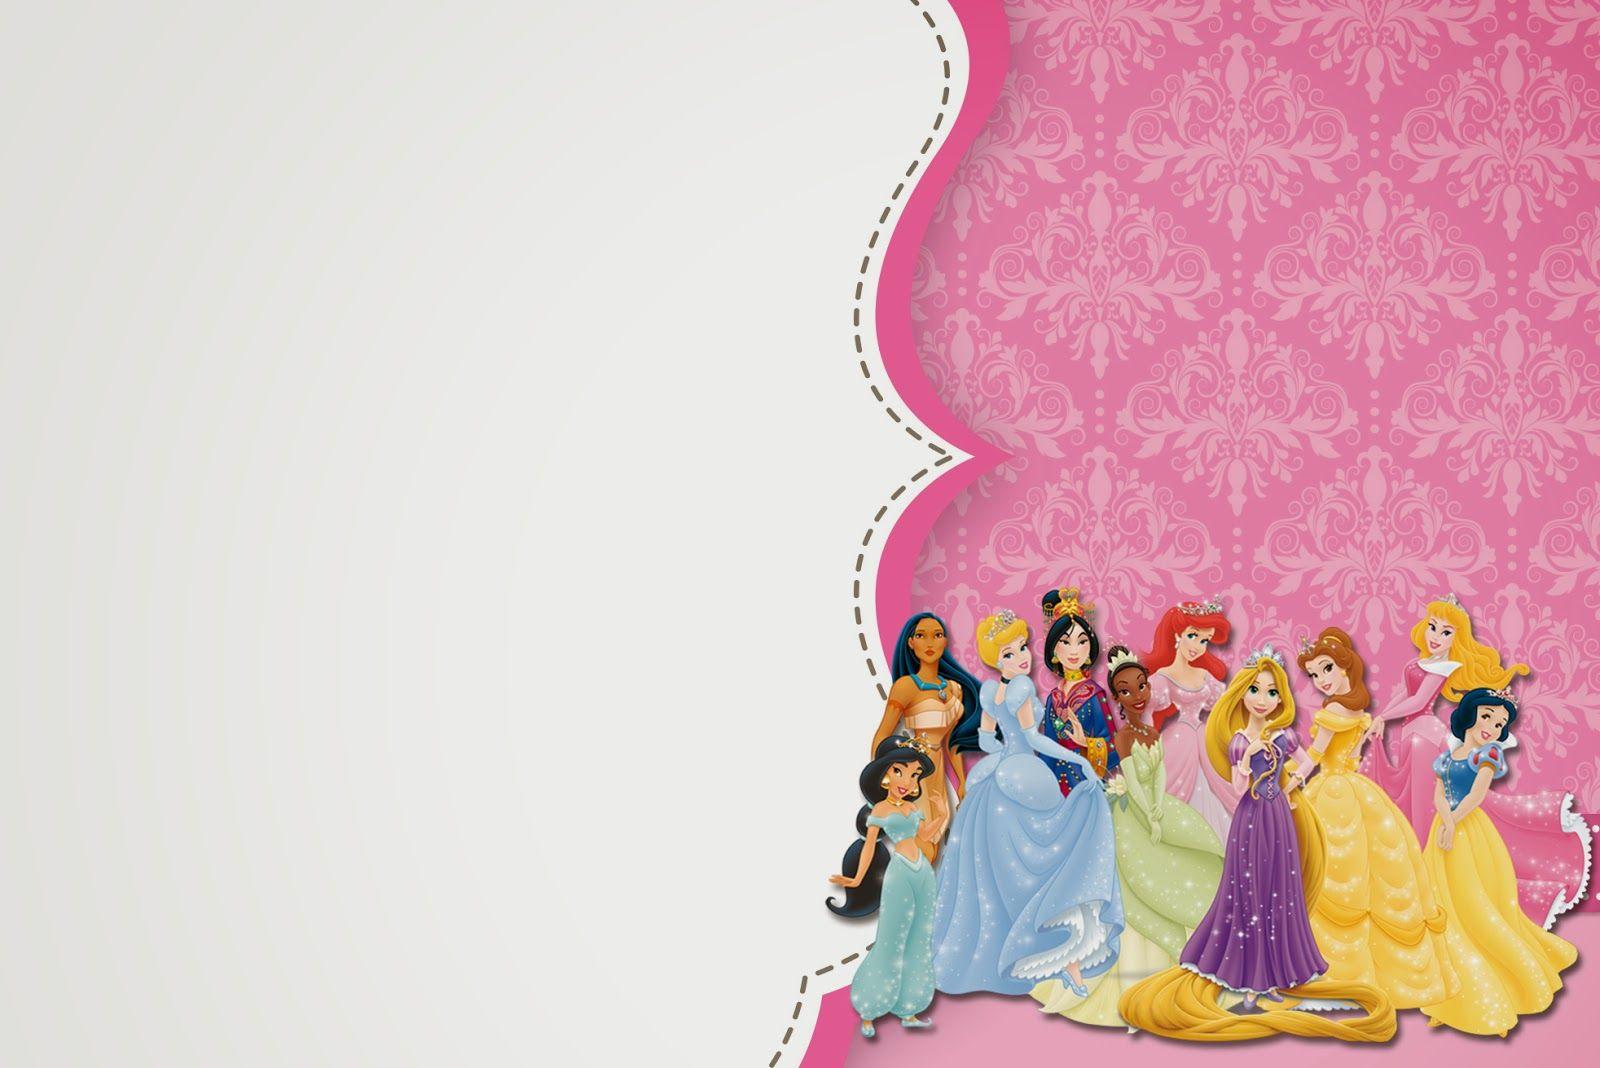 Disney Princess Backgrounds Wallpaper Cave